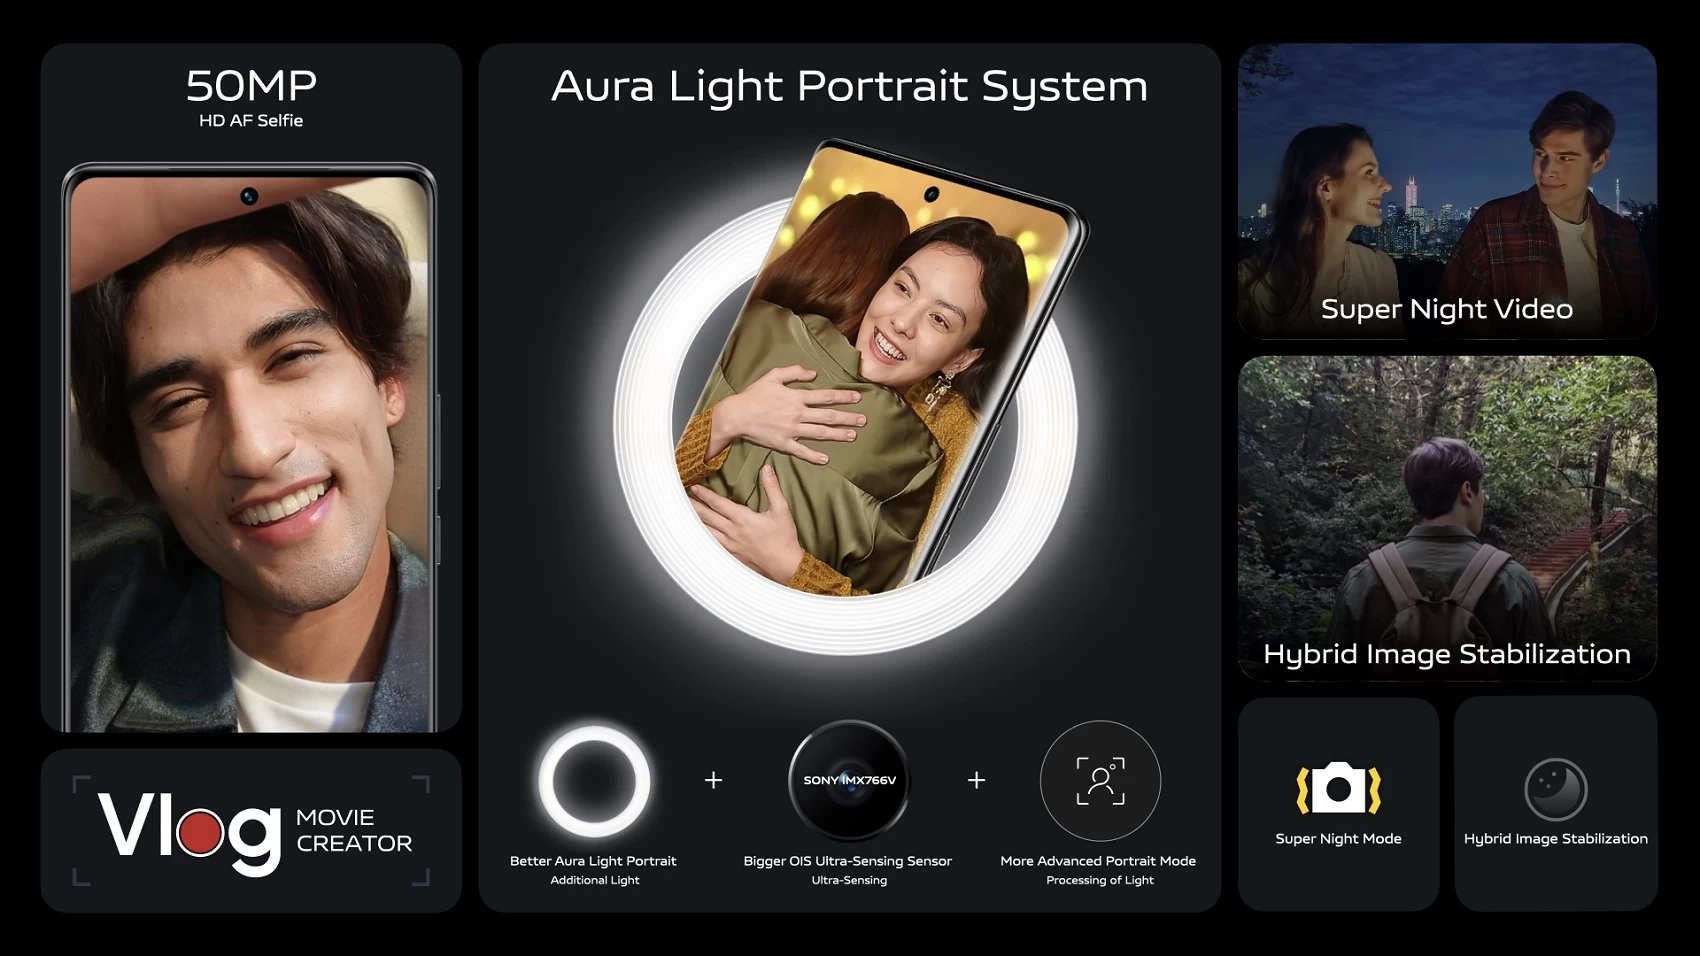 V27 Aura Light Portrait System | V27 5G | รวมข้อมูล vivo V27 5G ชูฟีเจอร์เด่น ‘Aura Light Portrait ’ ผู้นำพอร์ตเทรตกล้องหน้า-หลัง กับดีไซน์ใหม่ ‘สีเขียวหยก’ ในราคาเริ่มต้น 14,999 บาท